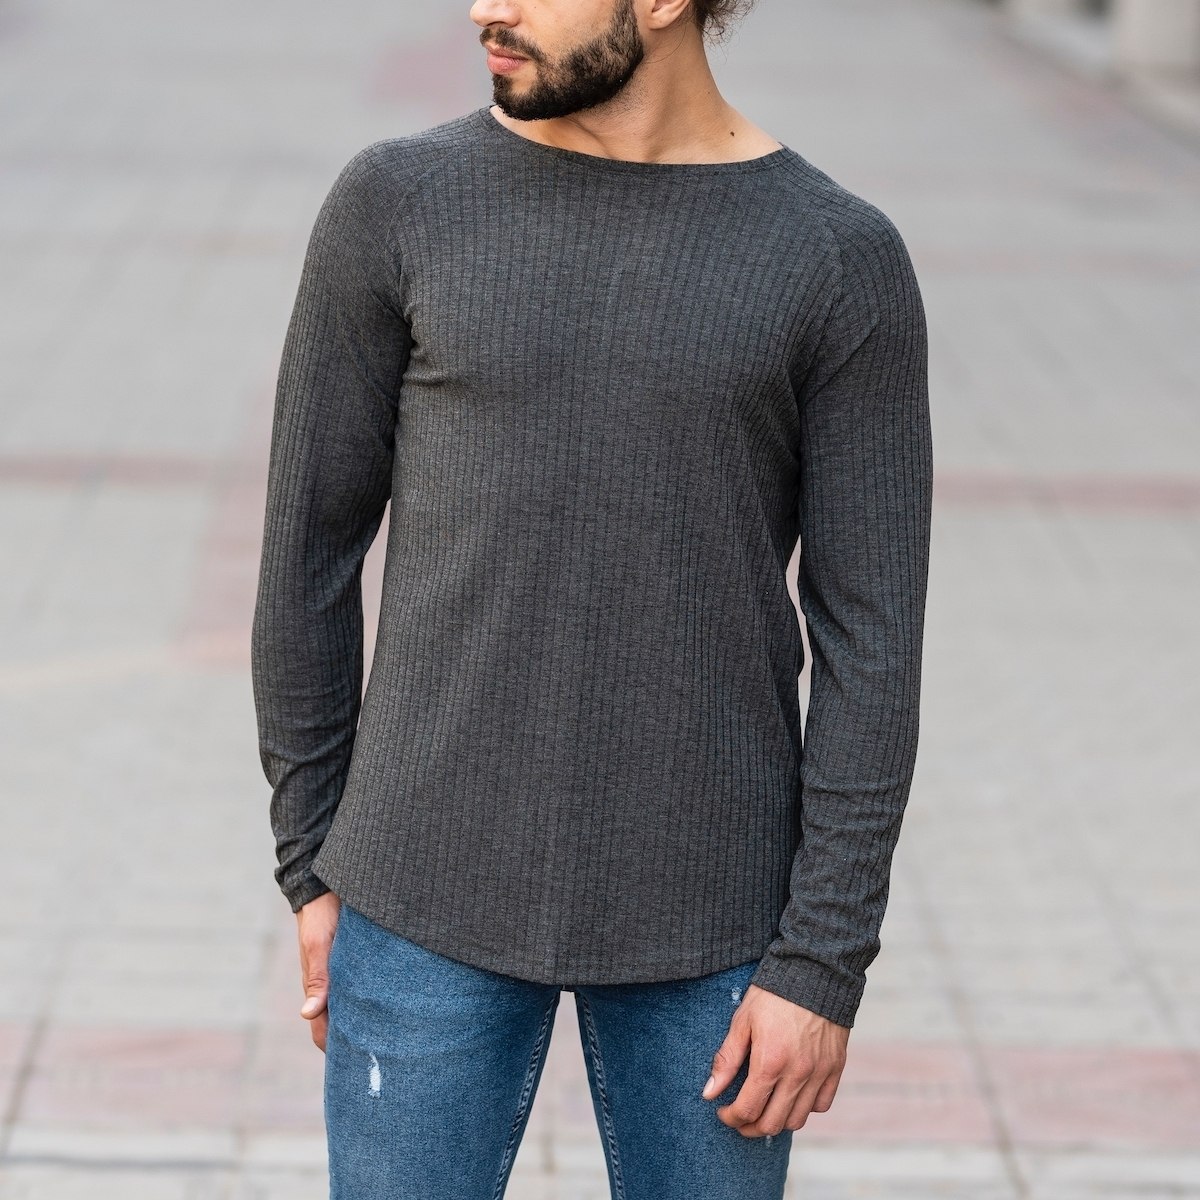 Gray Sweatshirt With Stripe Details - 1